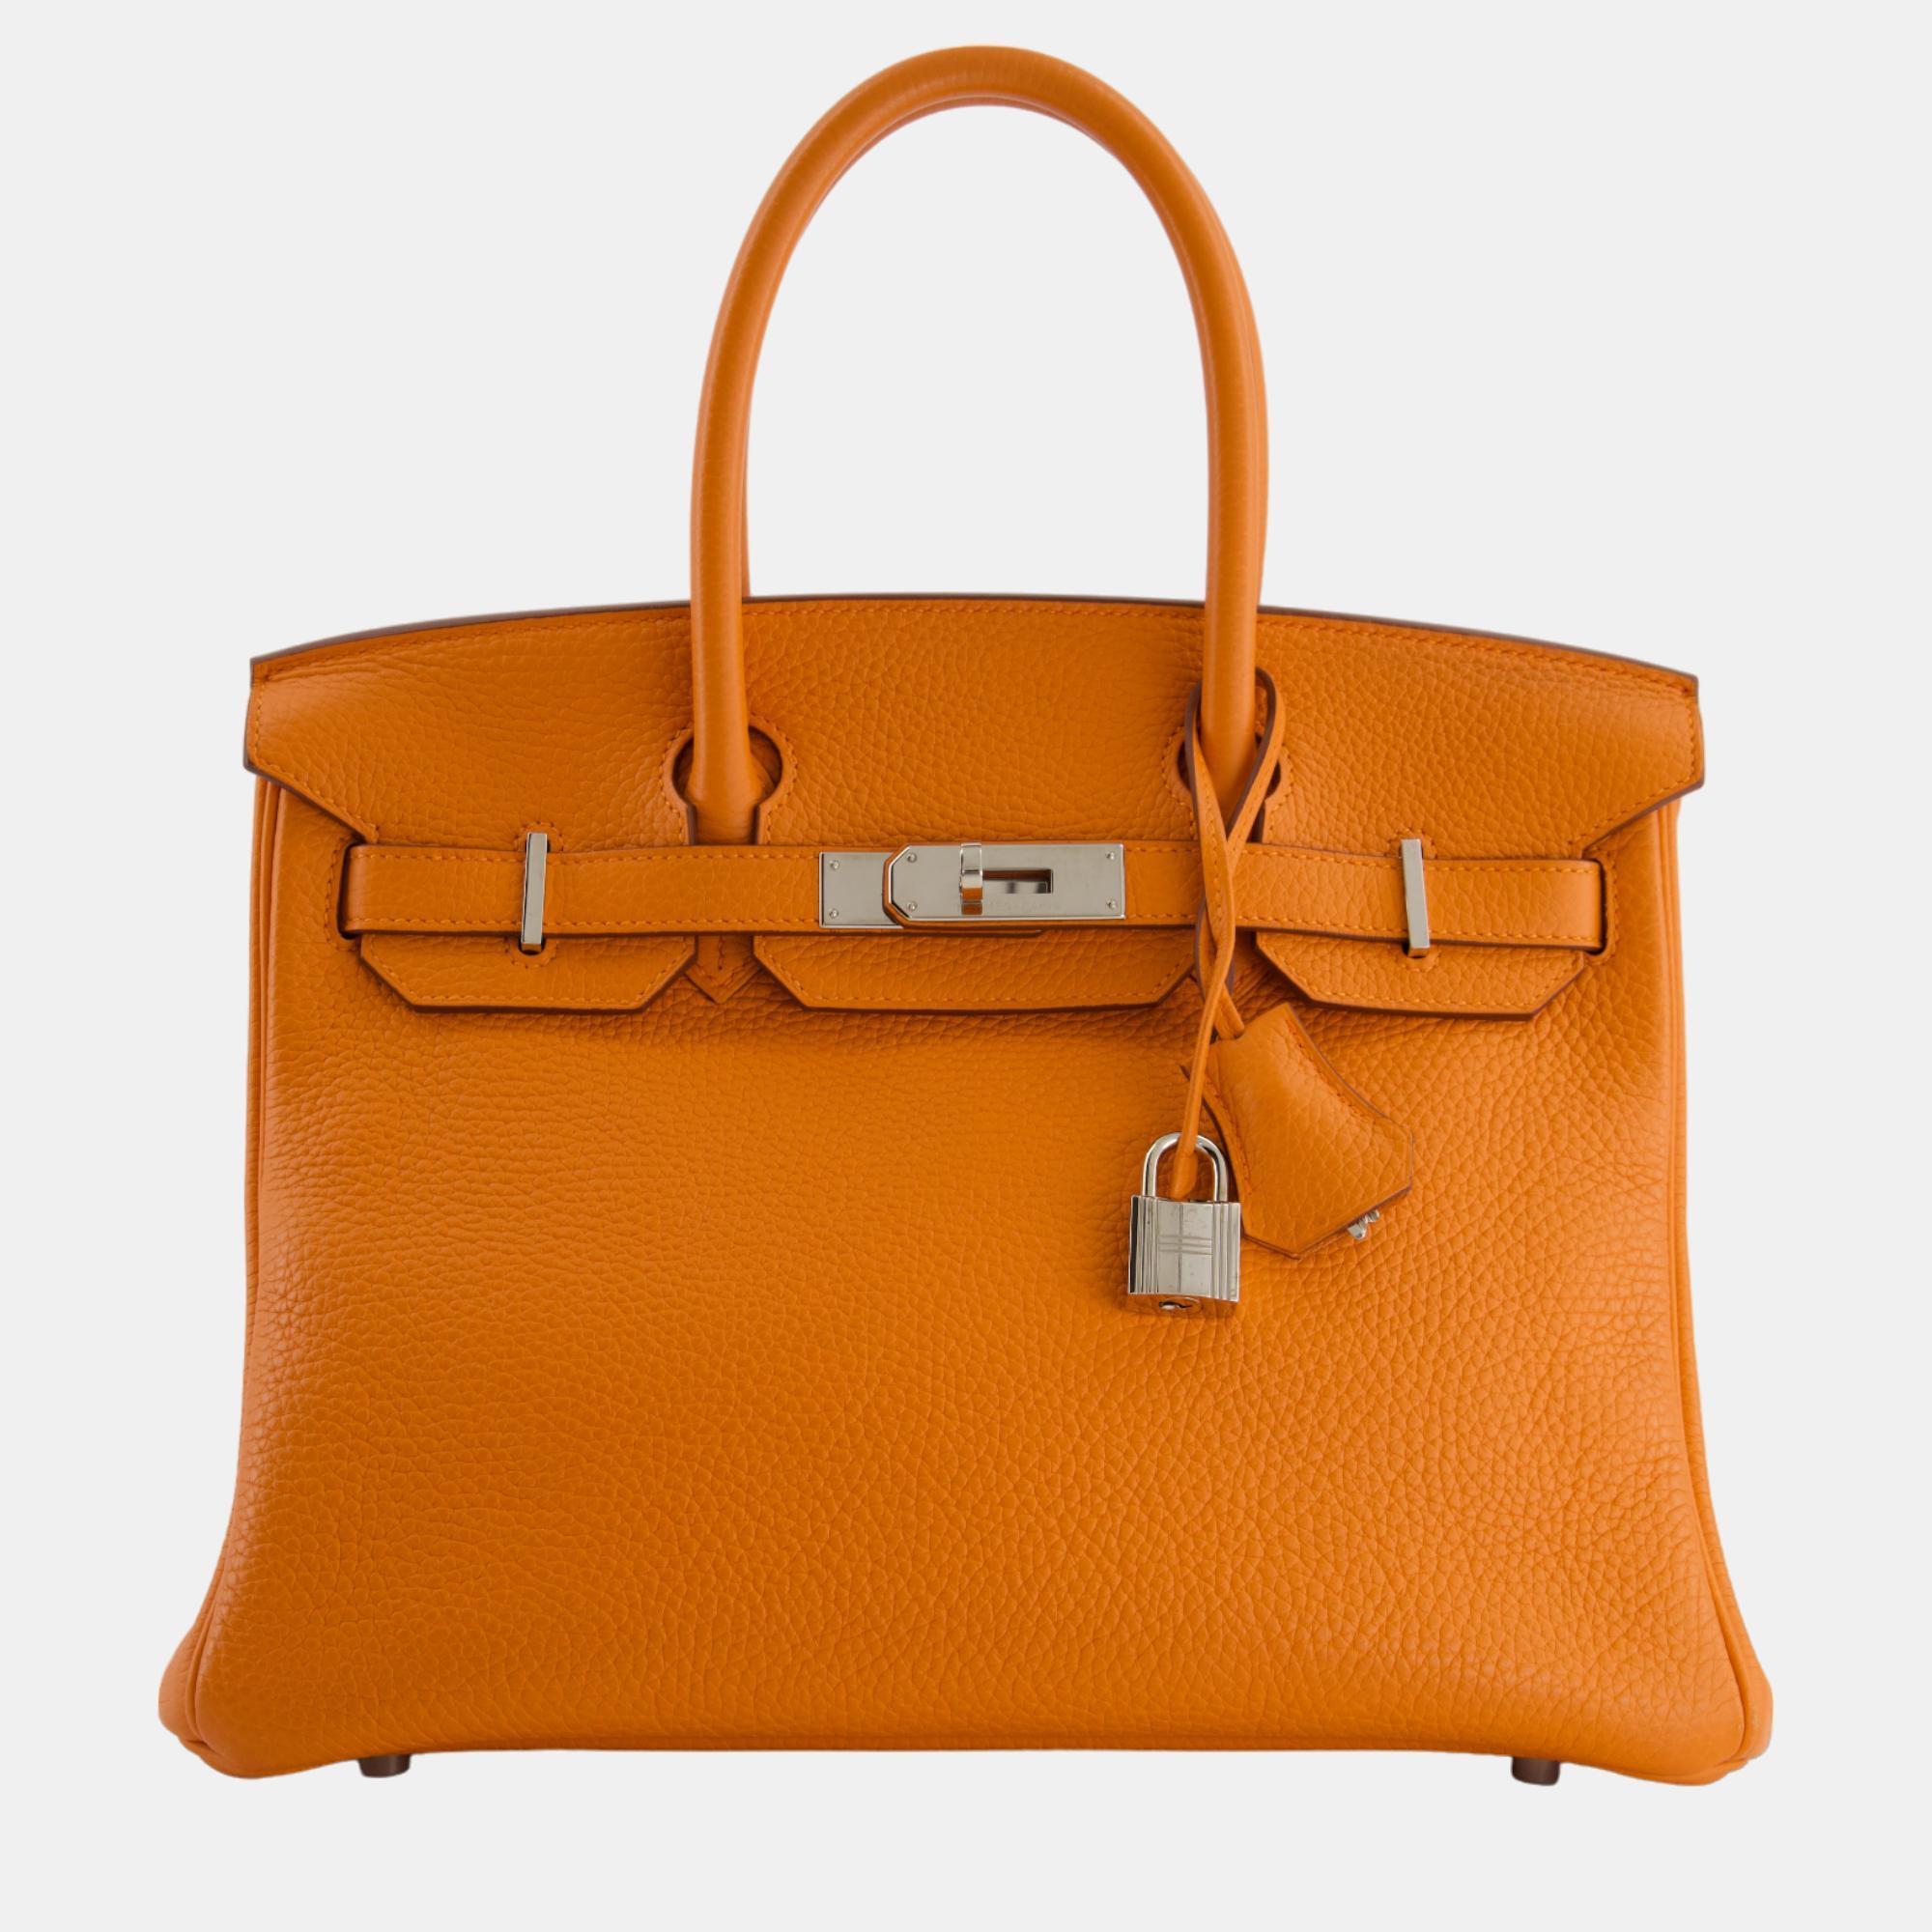 Hermes birkin retourne bag 30cm orange in clemence leather with palladium hardware